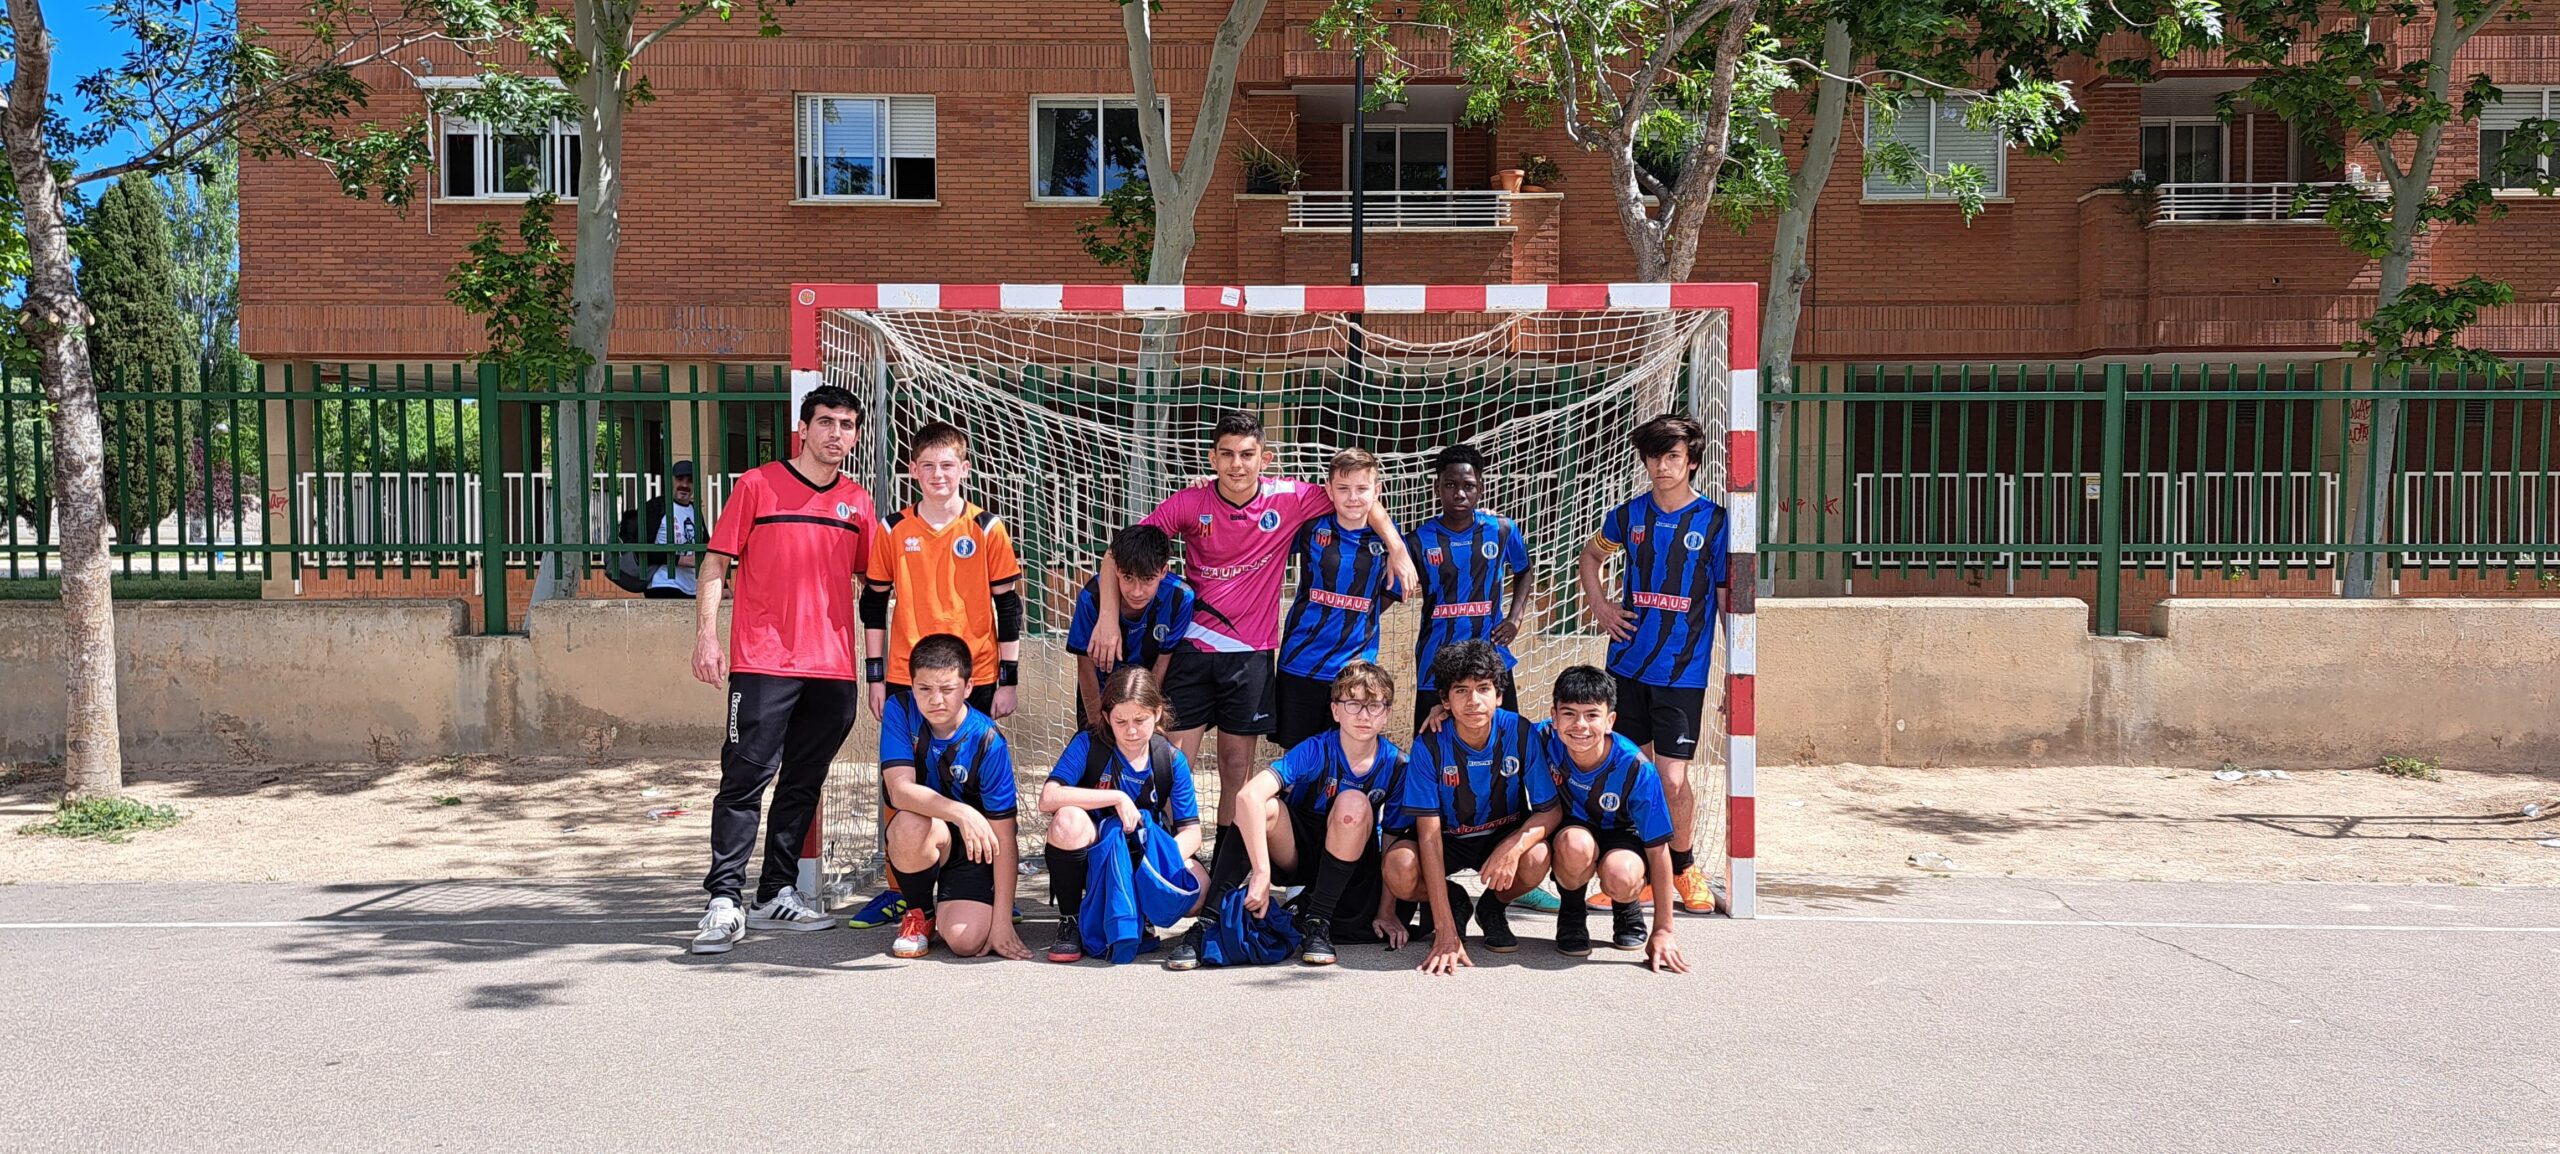 La Almozara 3-3 InterSala 10 Zaragoza (Infantil Masculino) – Jornada 13 -2º Fase